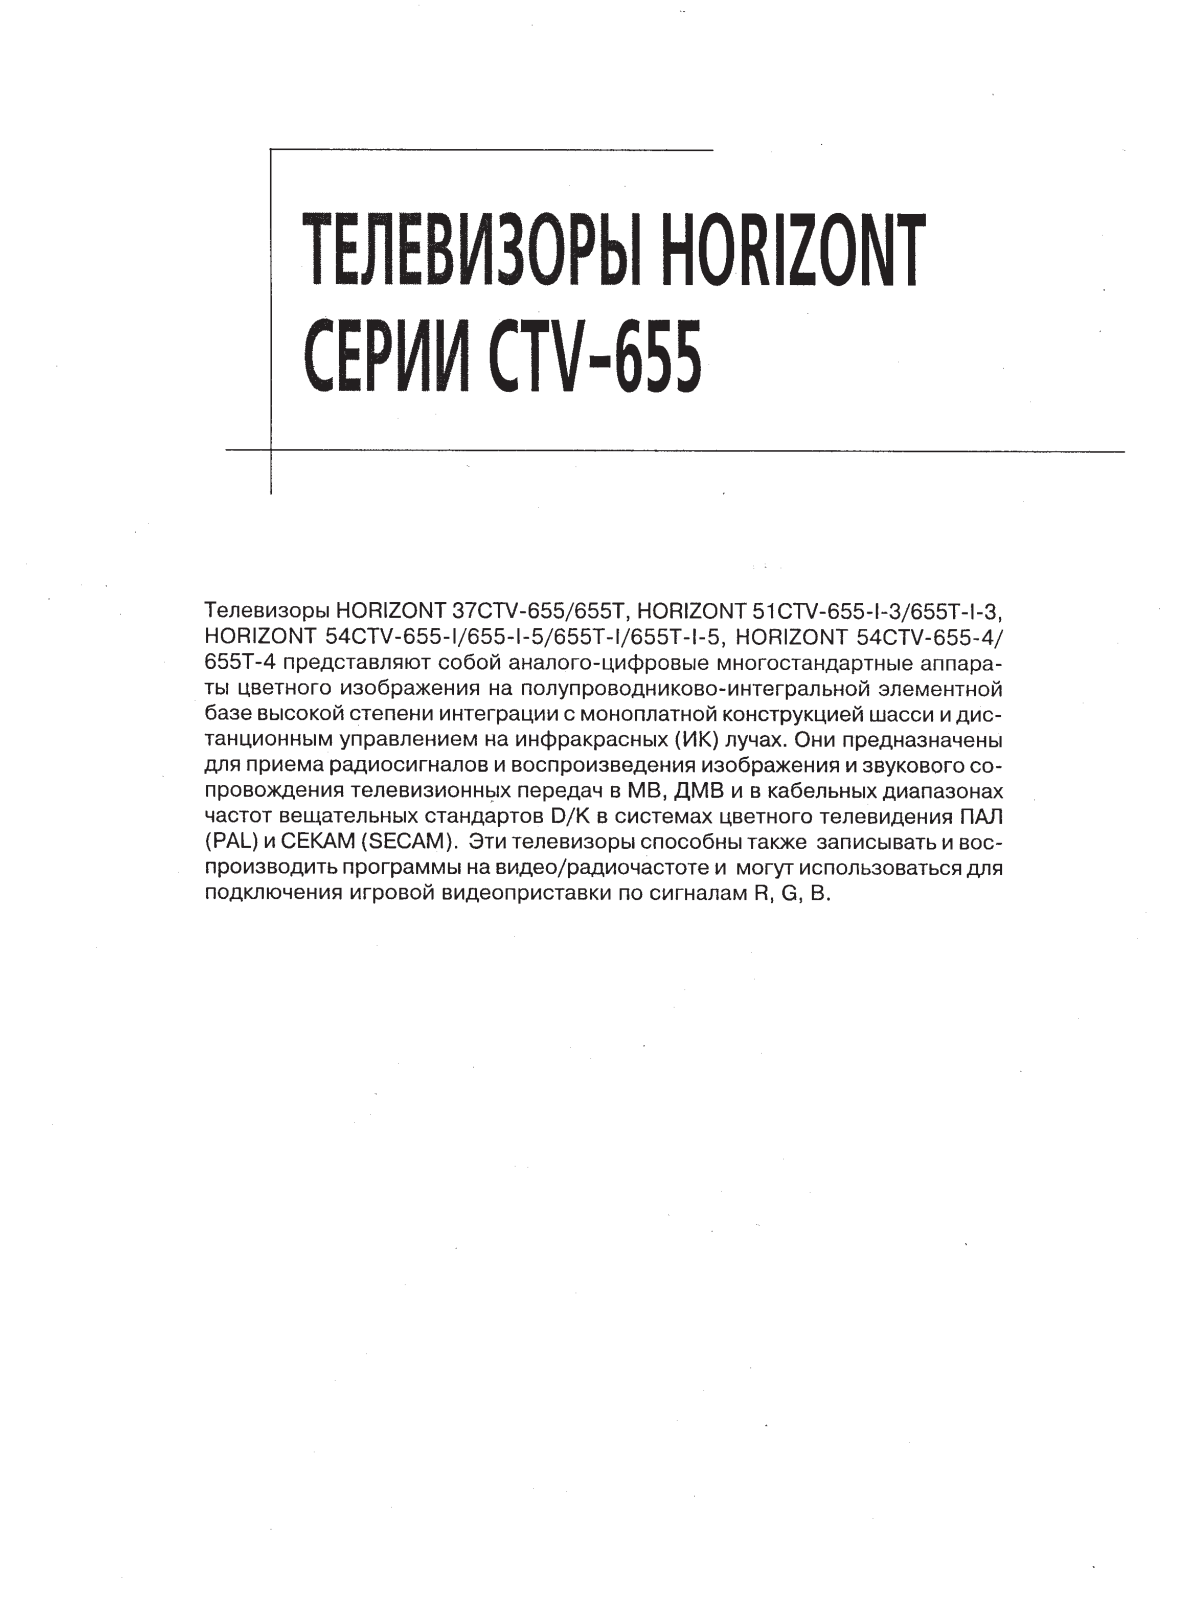 Horizont 37CTV-655, 51CTV-655, 54CTV-655 Service manual